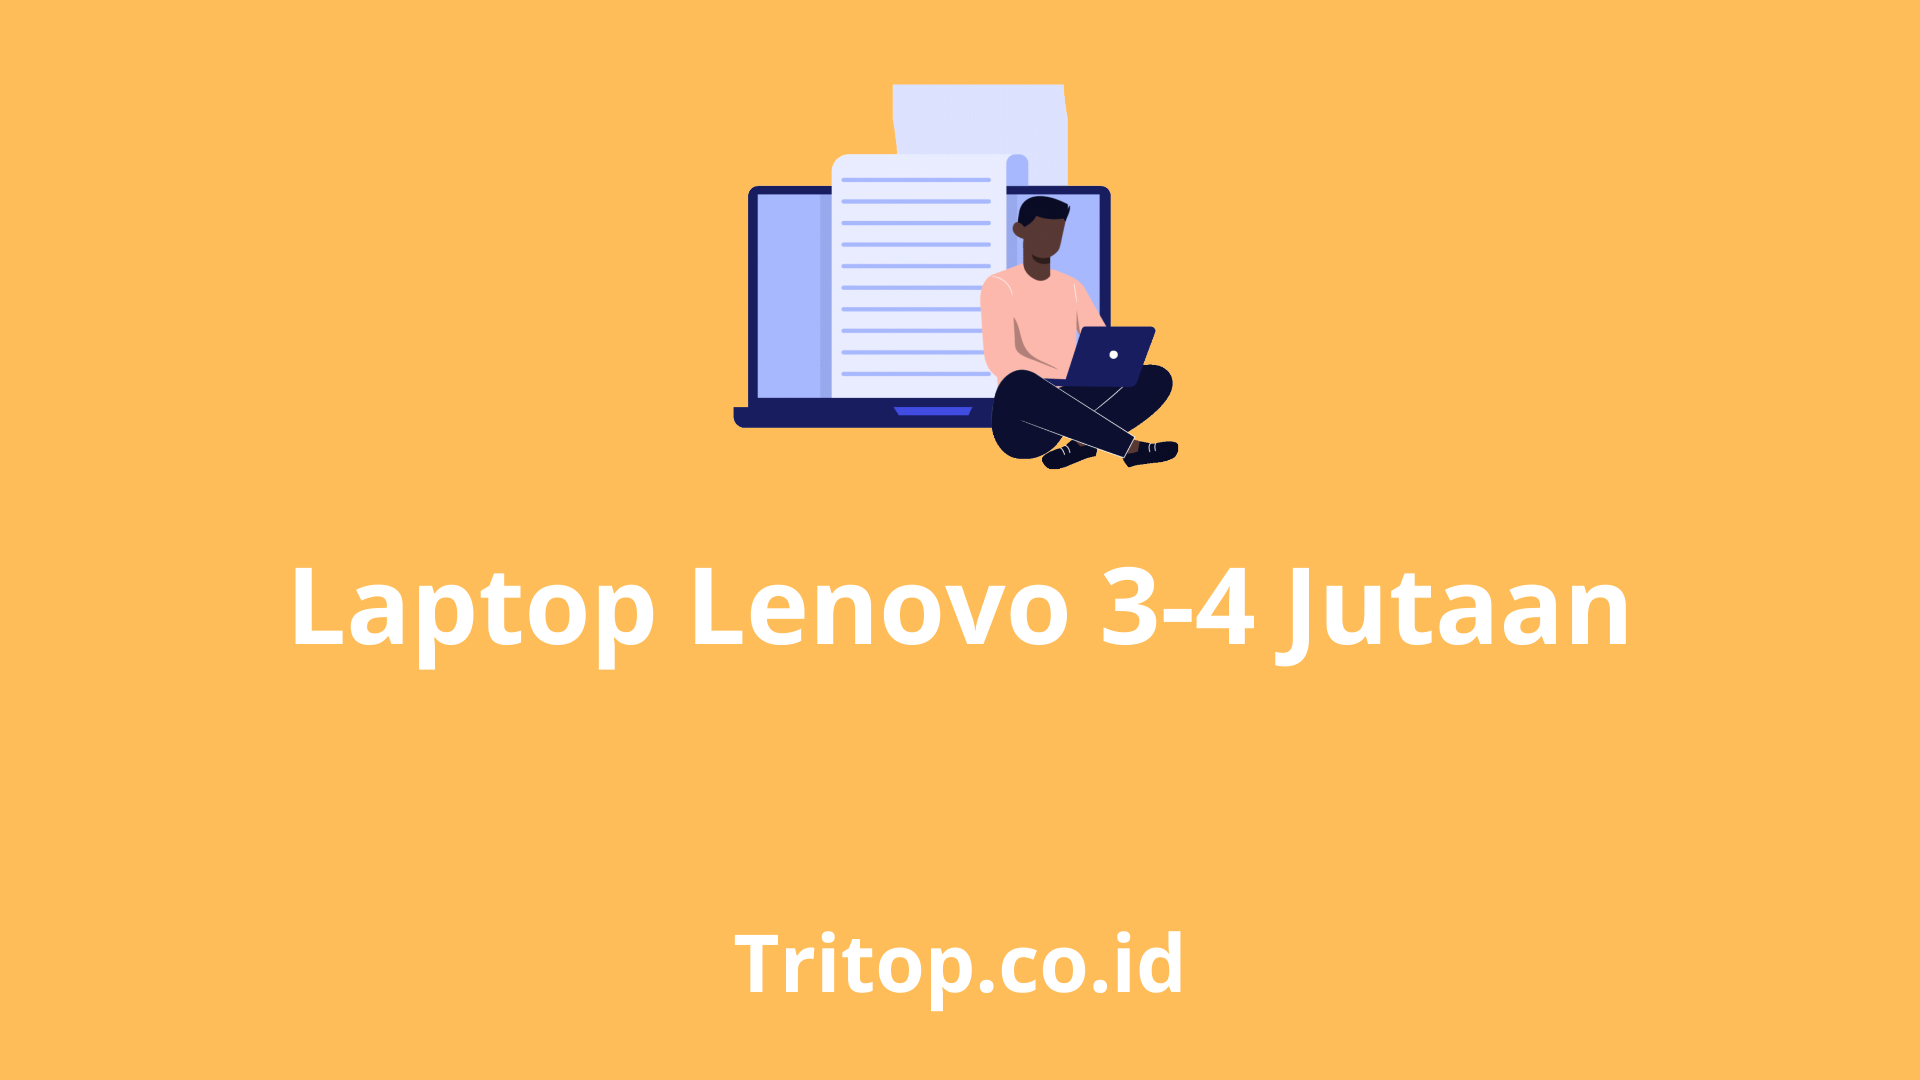 Laptop Lenovo 3-4 jutaan tritop.co.id